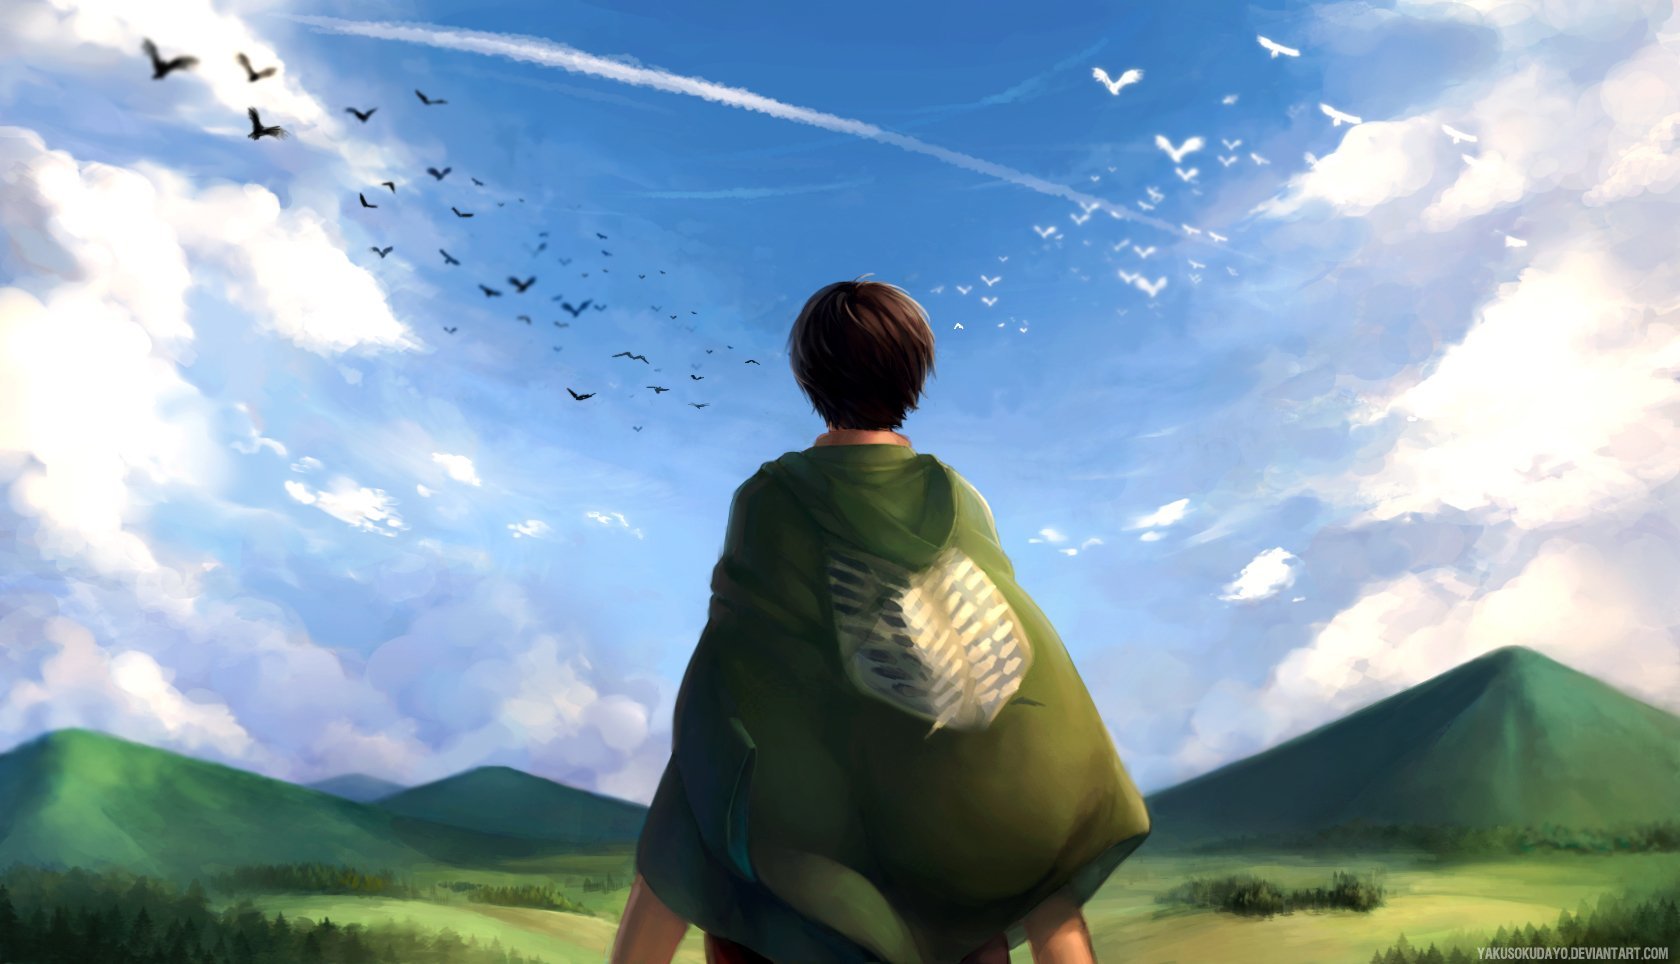 Feel the freedom by yakusokudayo Wallpaper and Background Image